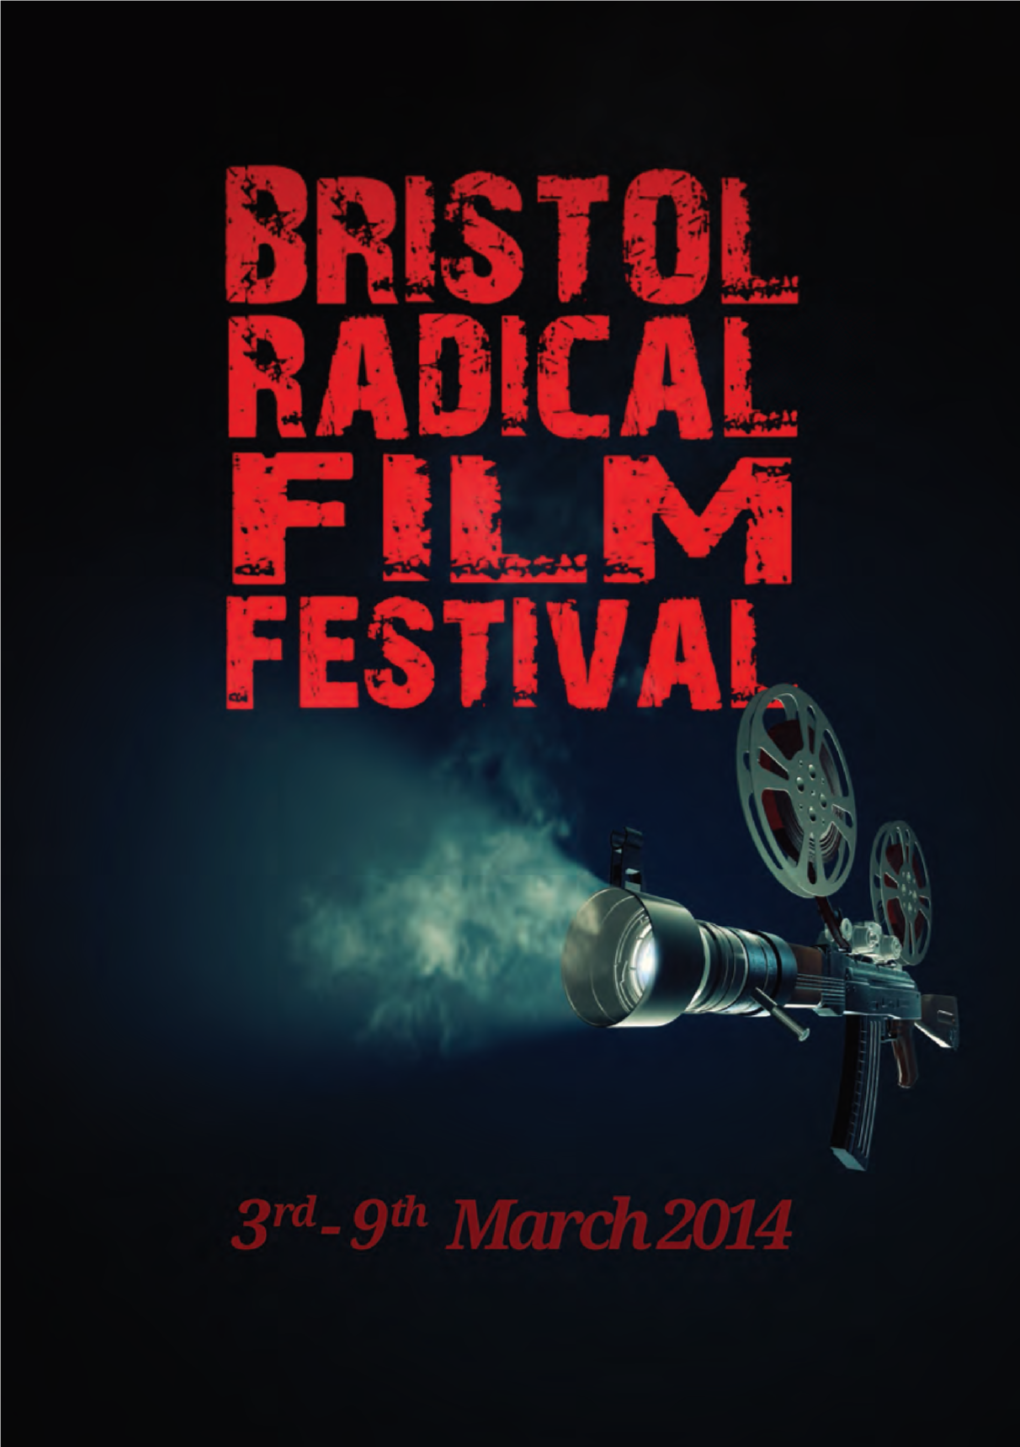 Bristol Radical Film Festival 2014 Programme at a Glance